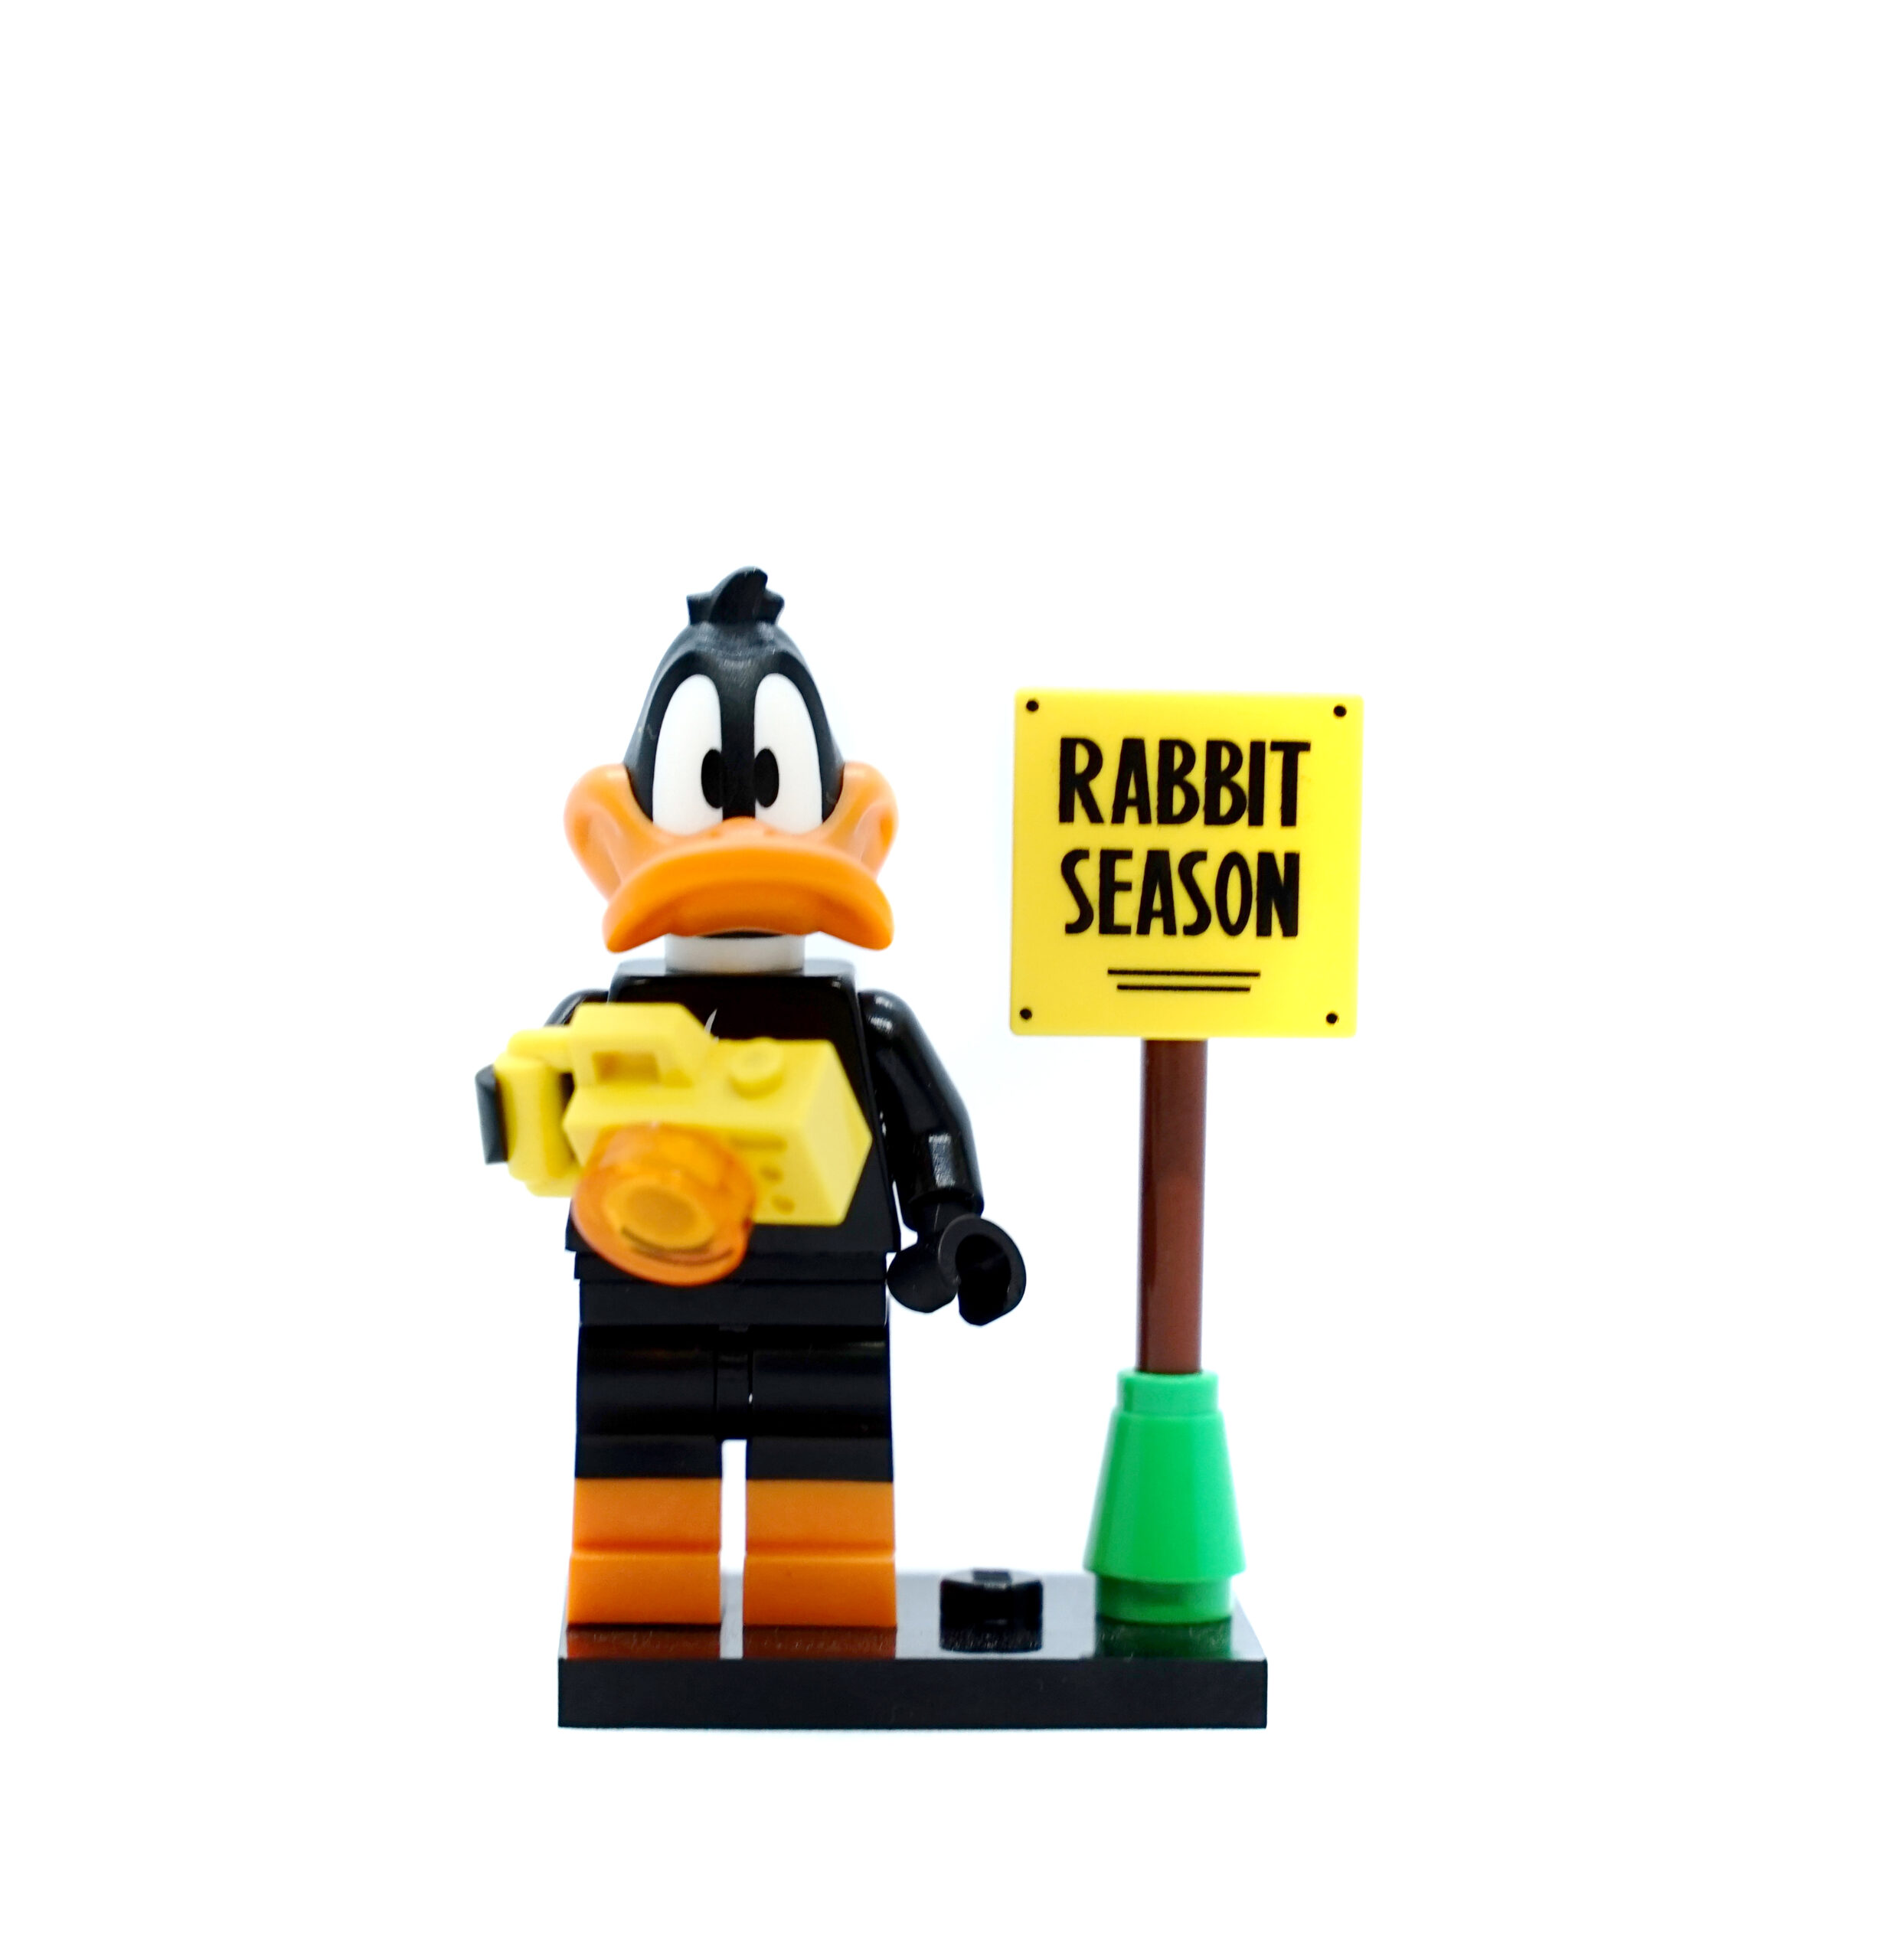 Figurka LEGO Kaczor Daffy Rabbit season